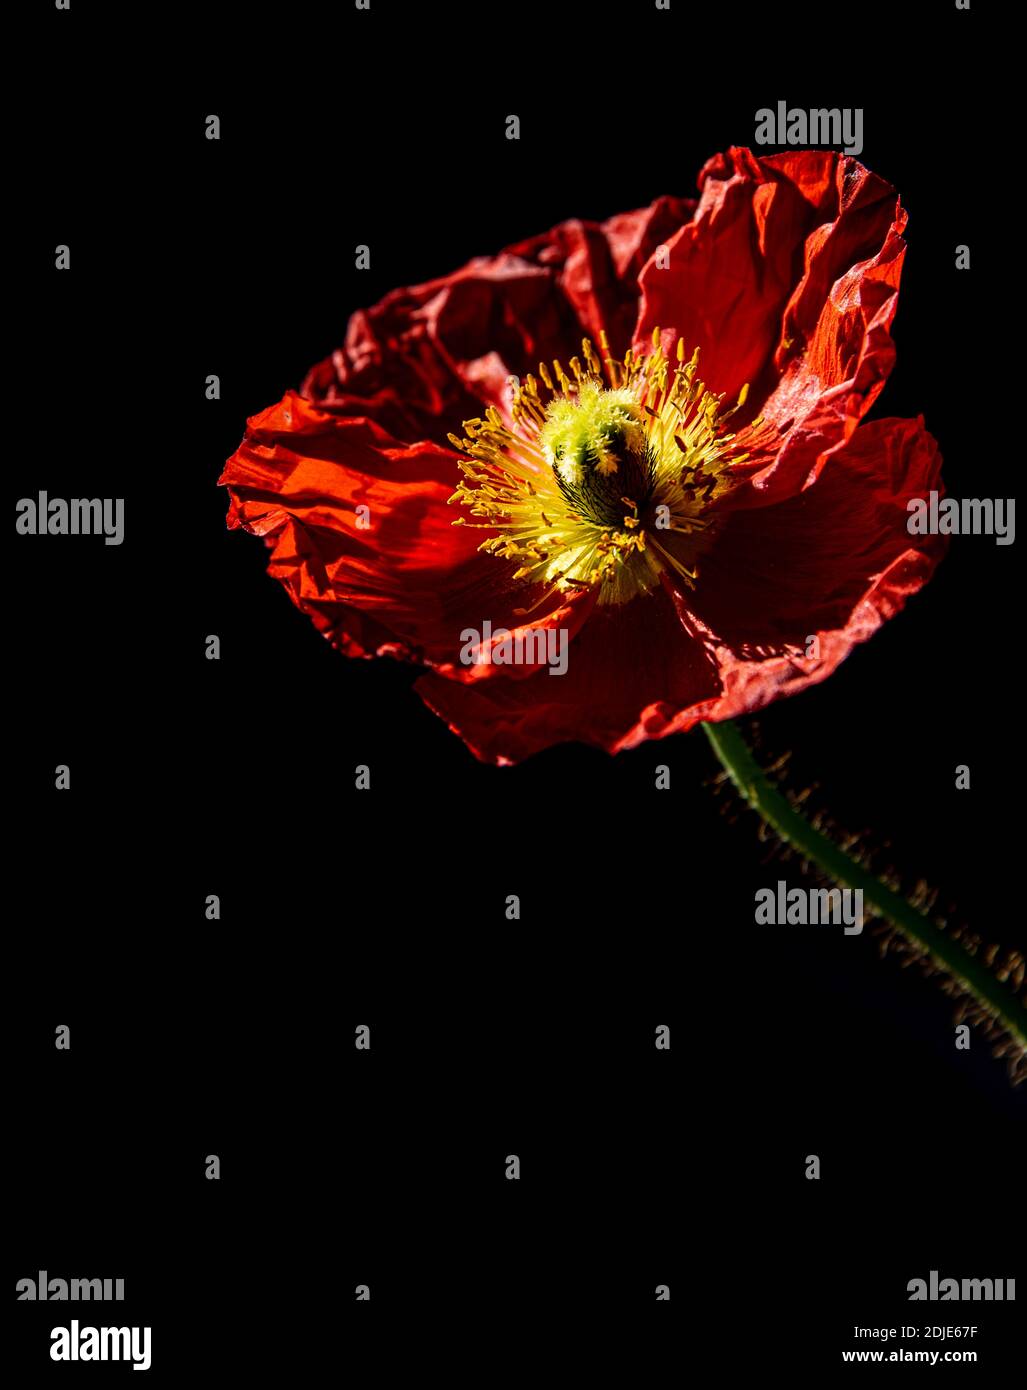 Vibrant red poppy flower on a black background Stock Photo